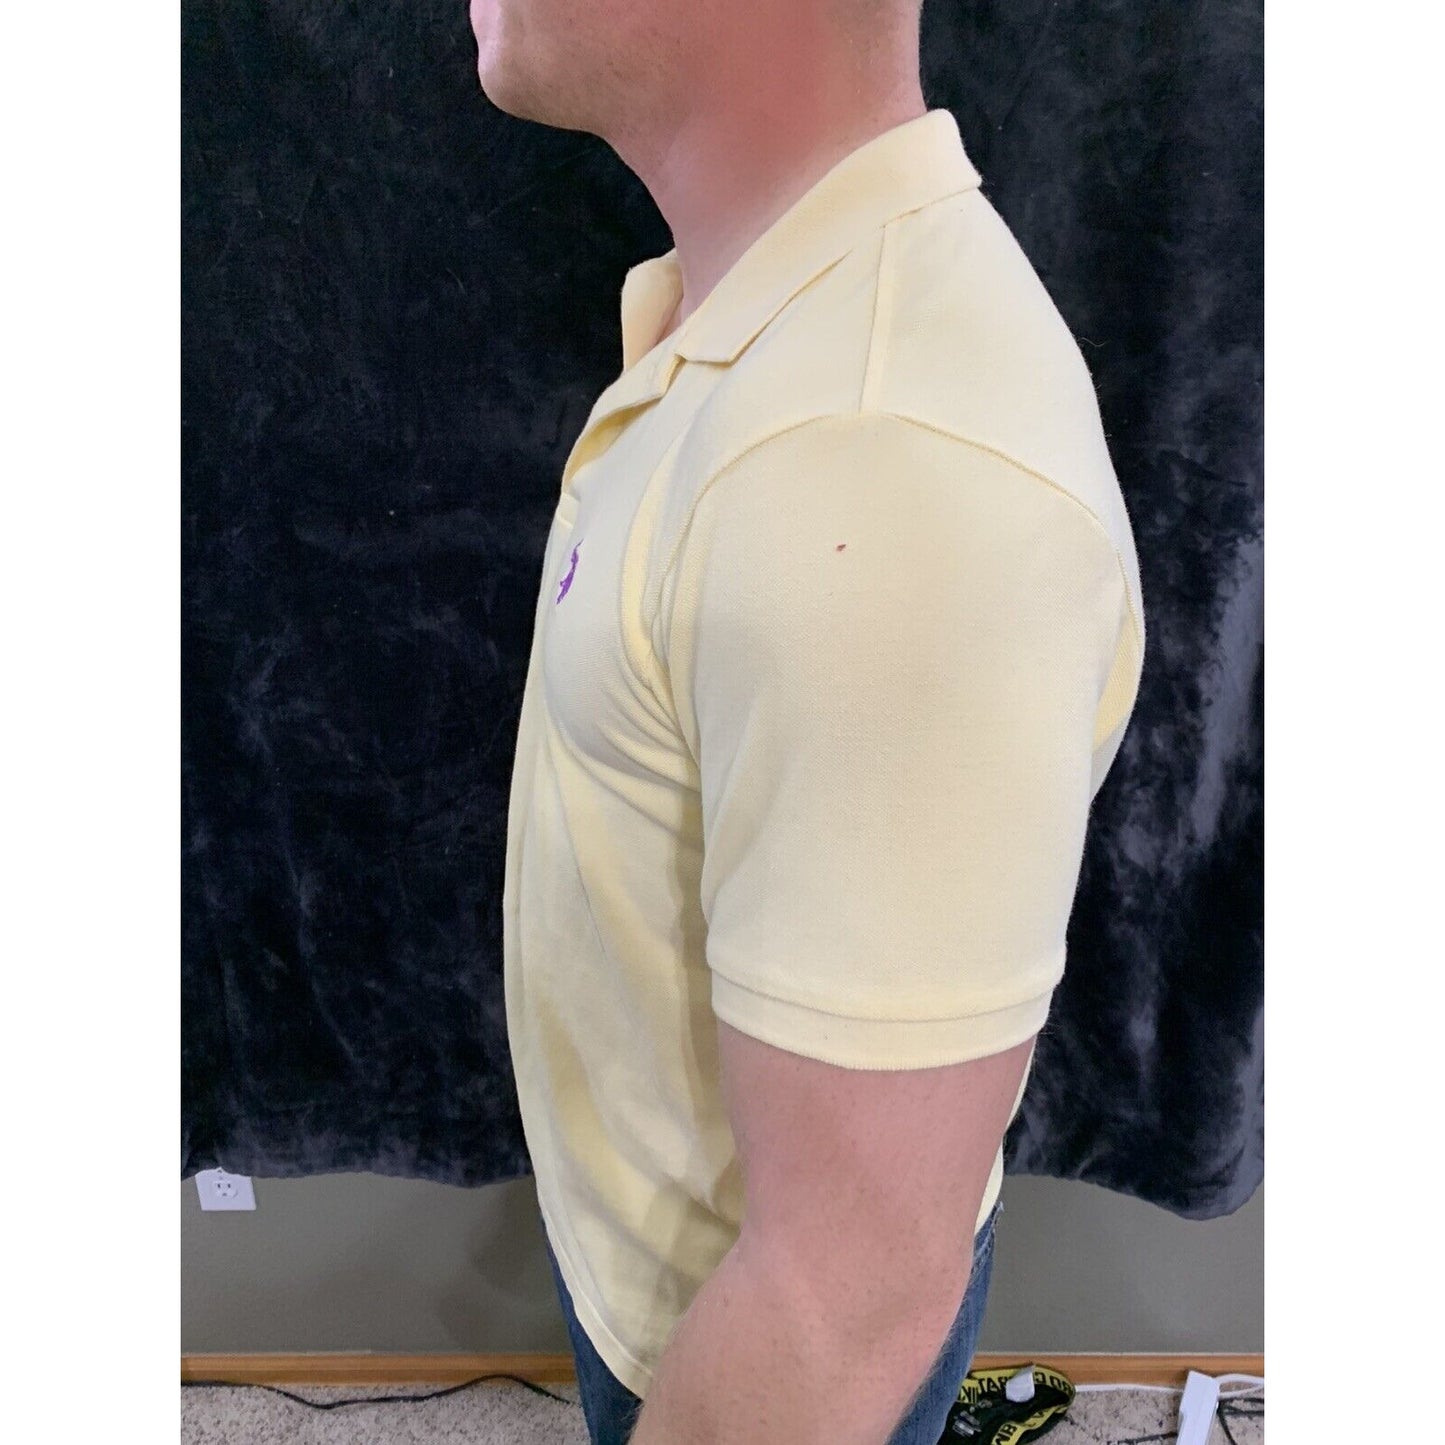 U.S. Polo Assn. Mens Light Yellow Polo Shirt Medium Short Sleeve Soft Material